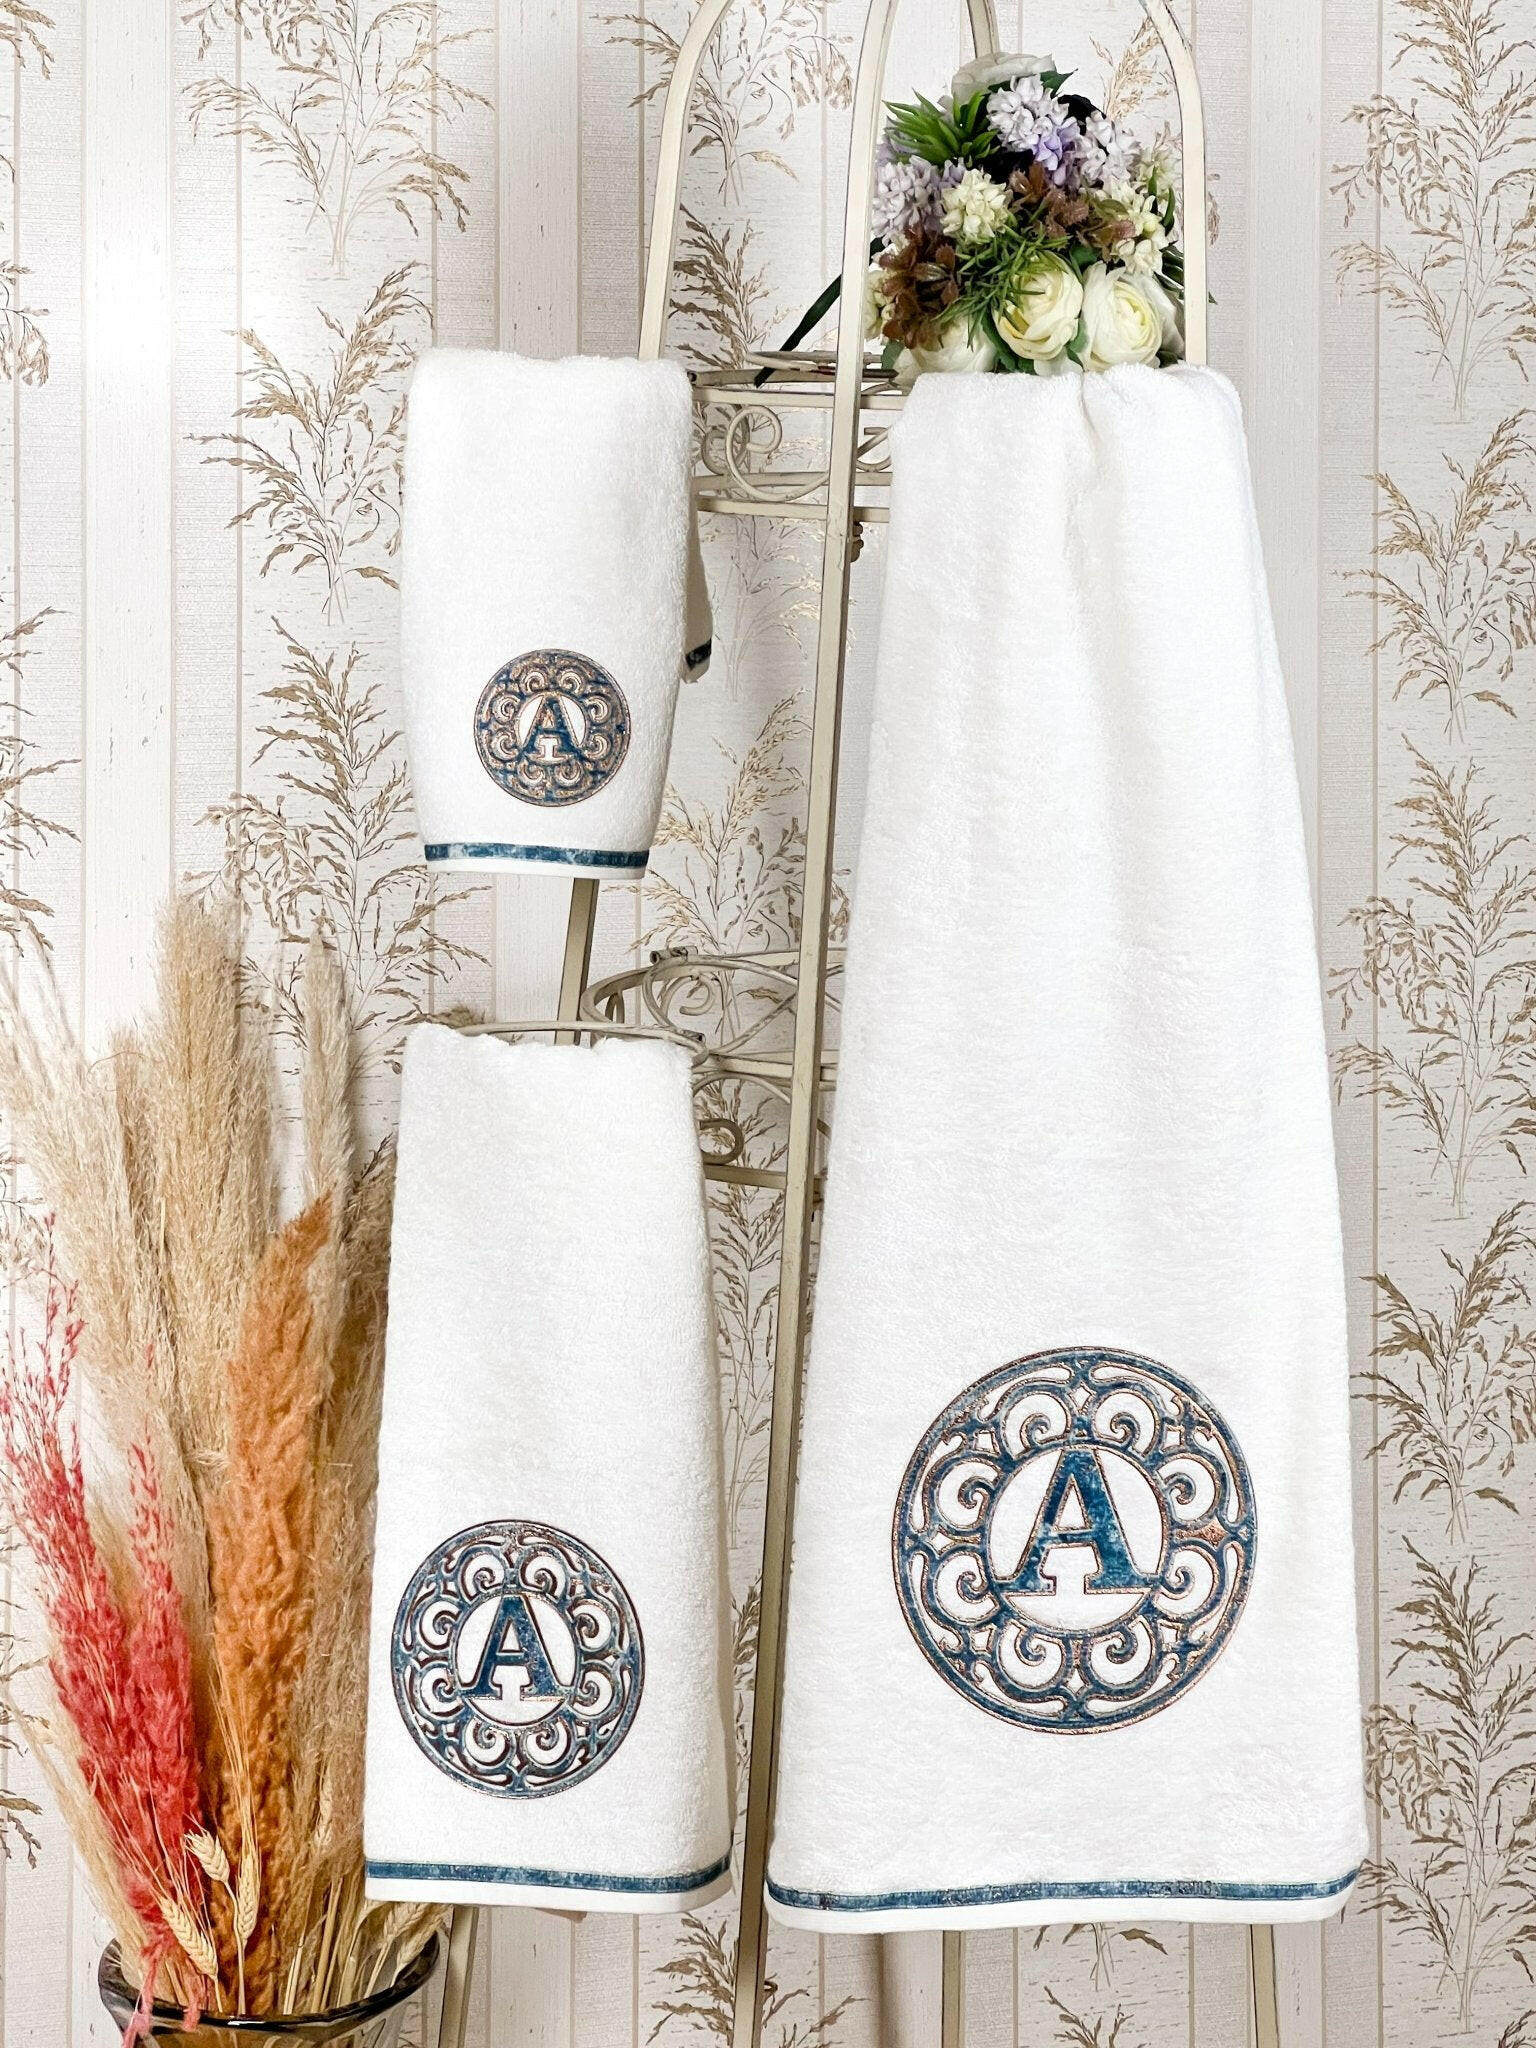 Embroidered Bath Towel Set Initials